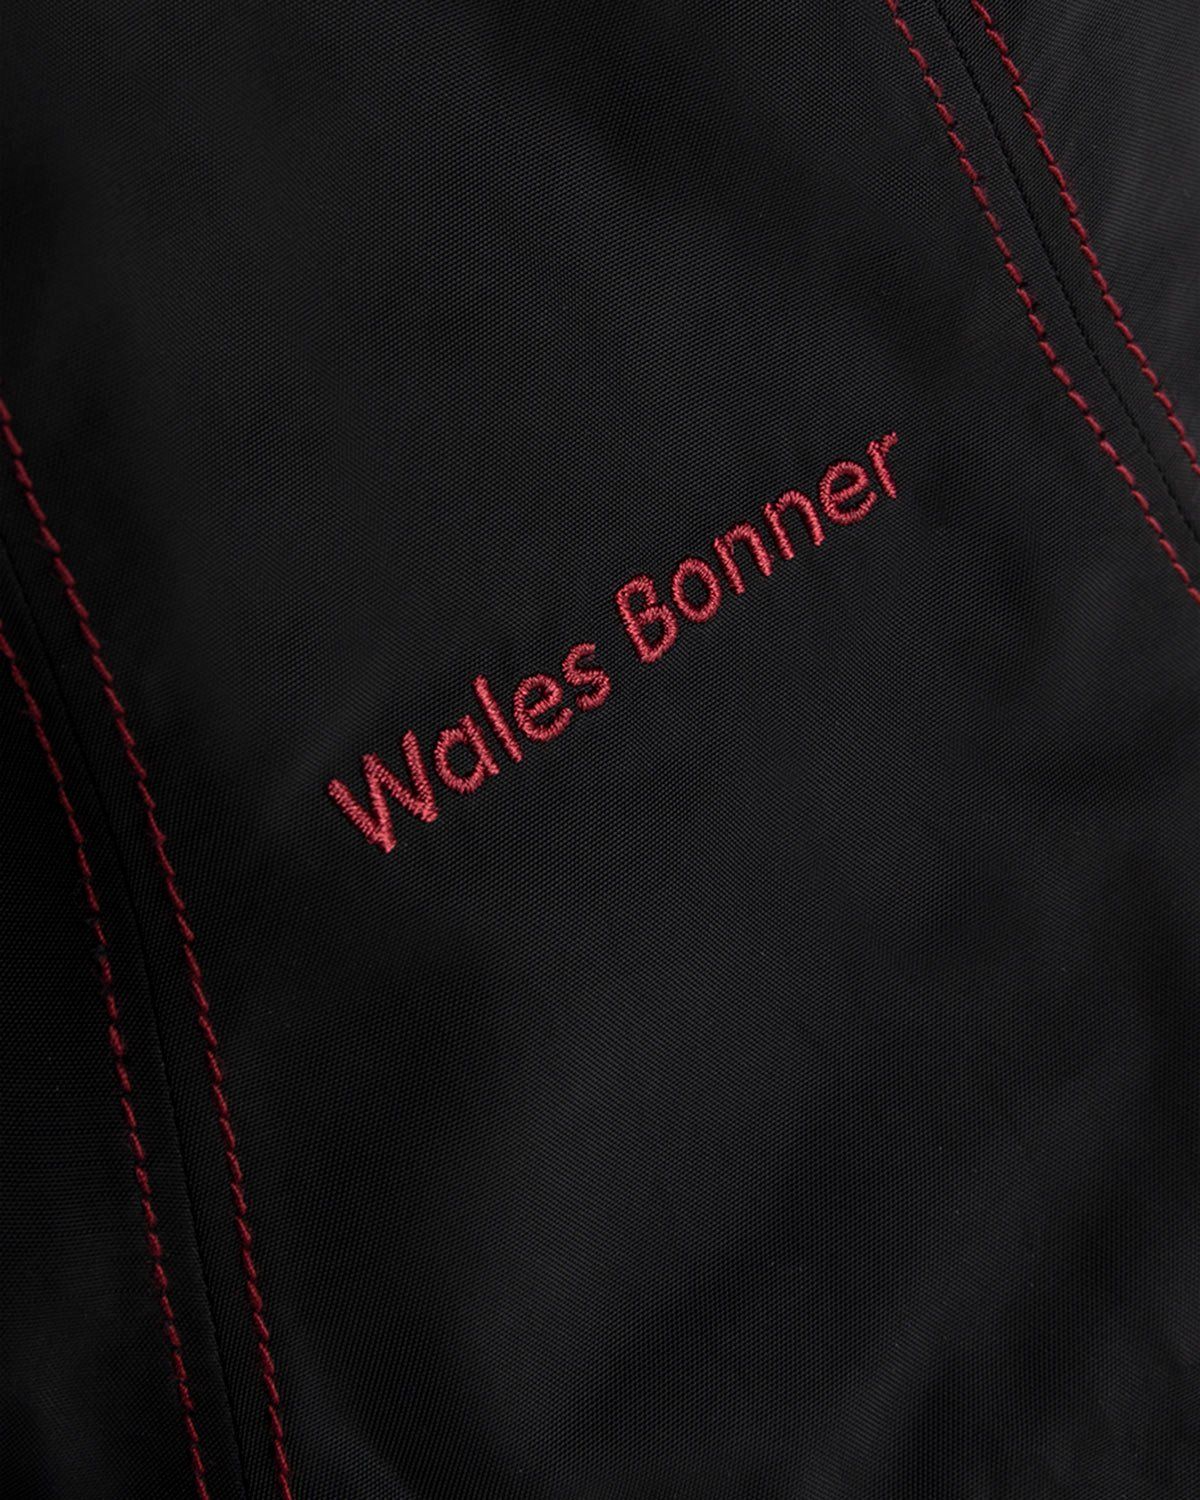 Adidas x Wales Bonner – Sunhat Black Burgundy - Bucket Hats - Red - Image 3